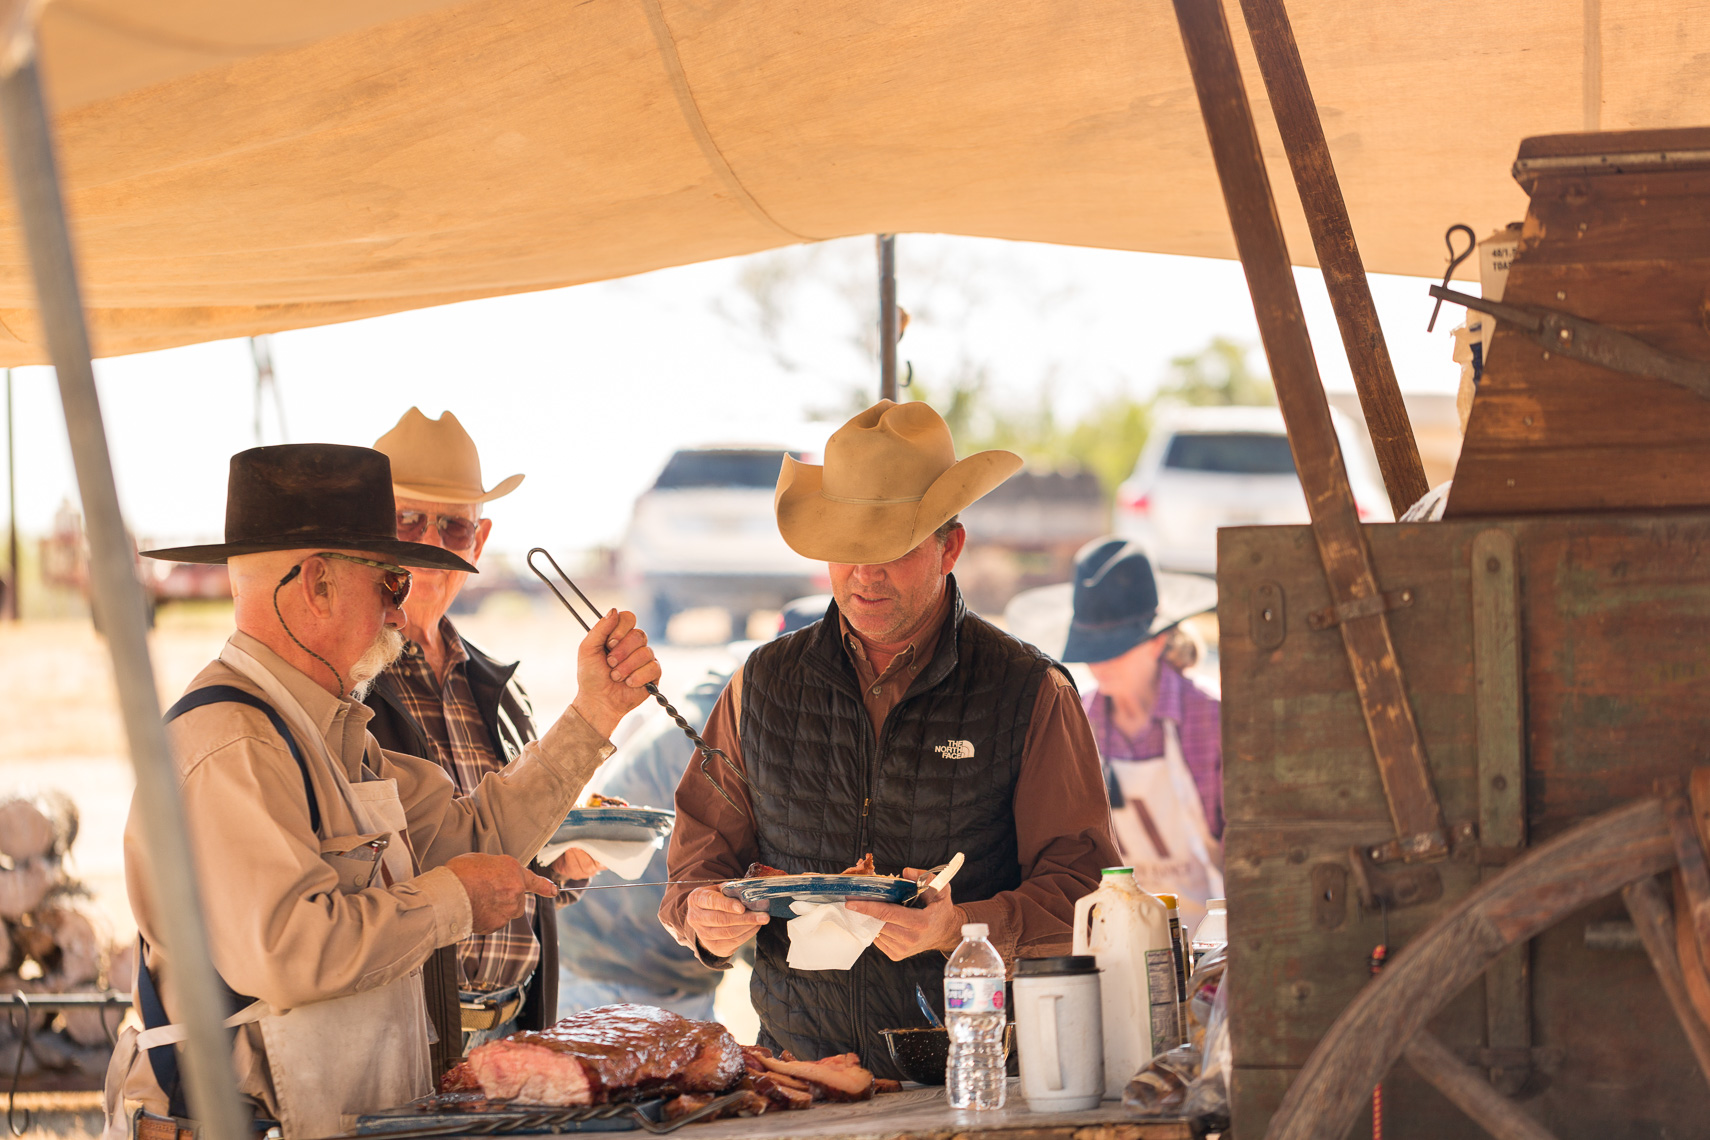 Chuck-Wagon-Food-Cooking-South-Texas-Ranch-Jason-Risner-Photographt-9727-Edit